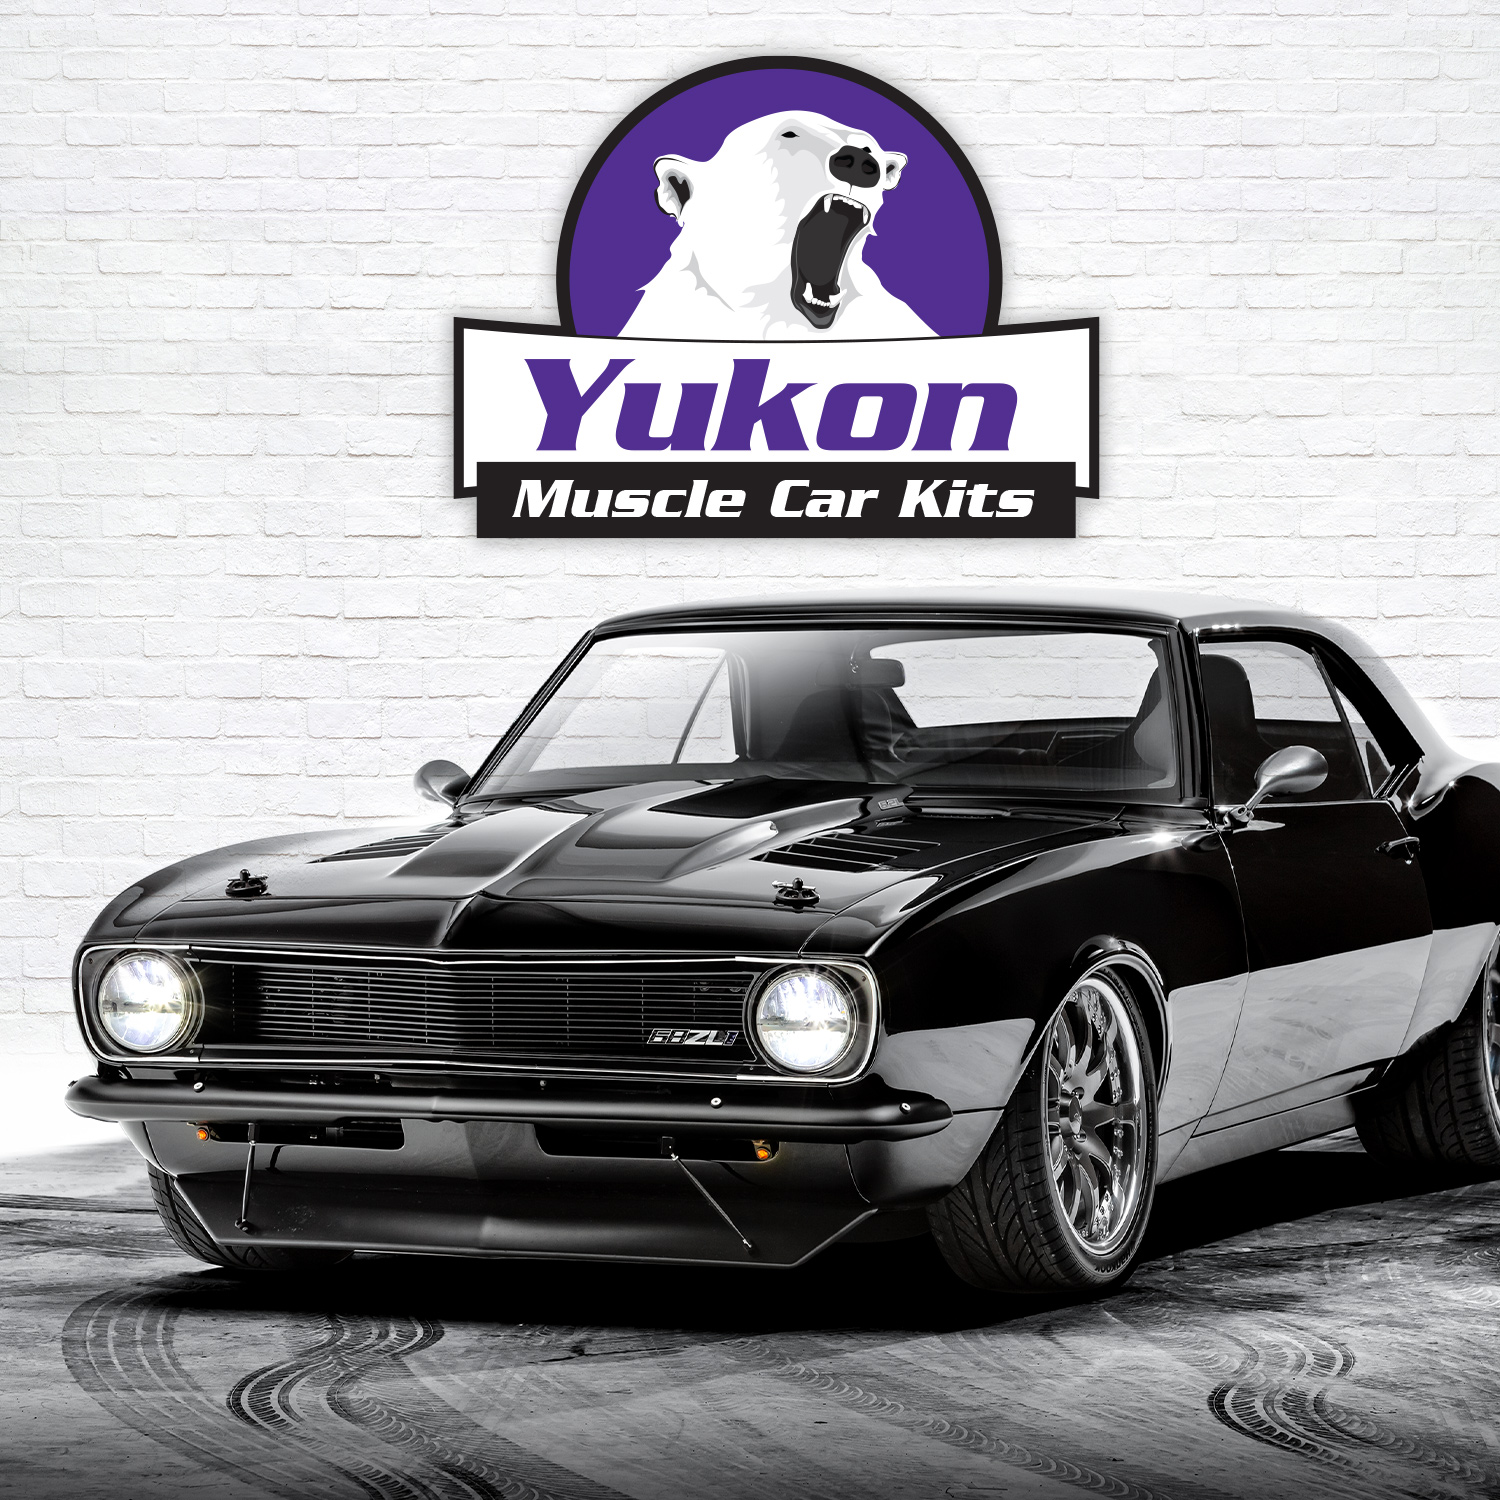 Yukon Muscle Car Limited Slip & Re-Gear Kit, Chrysler 8.75”, 10 spln, 3.55 ratio